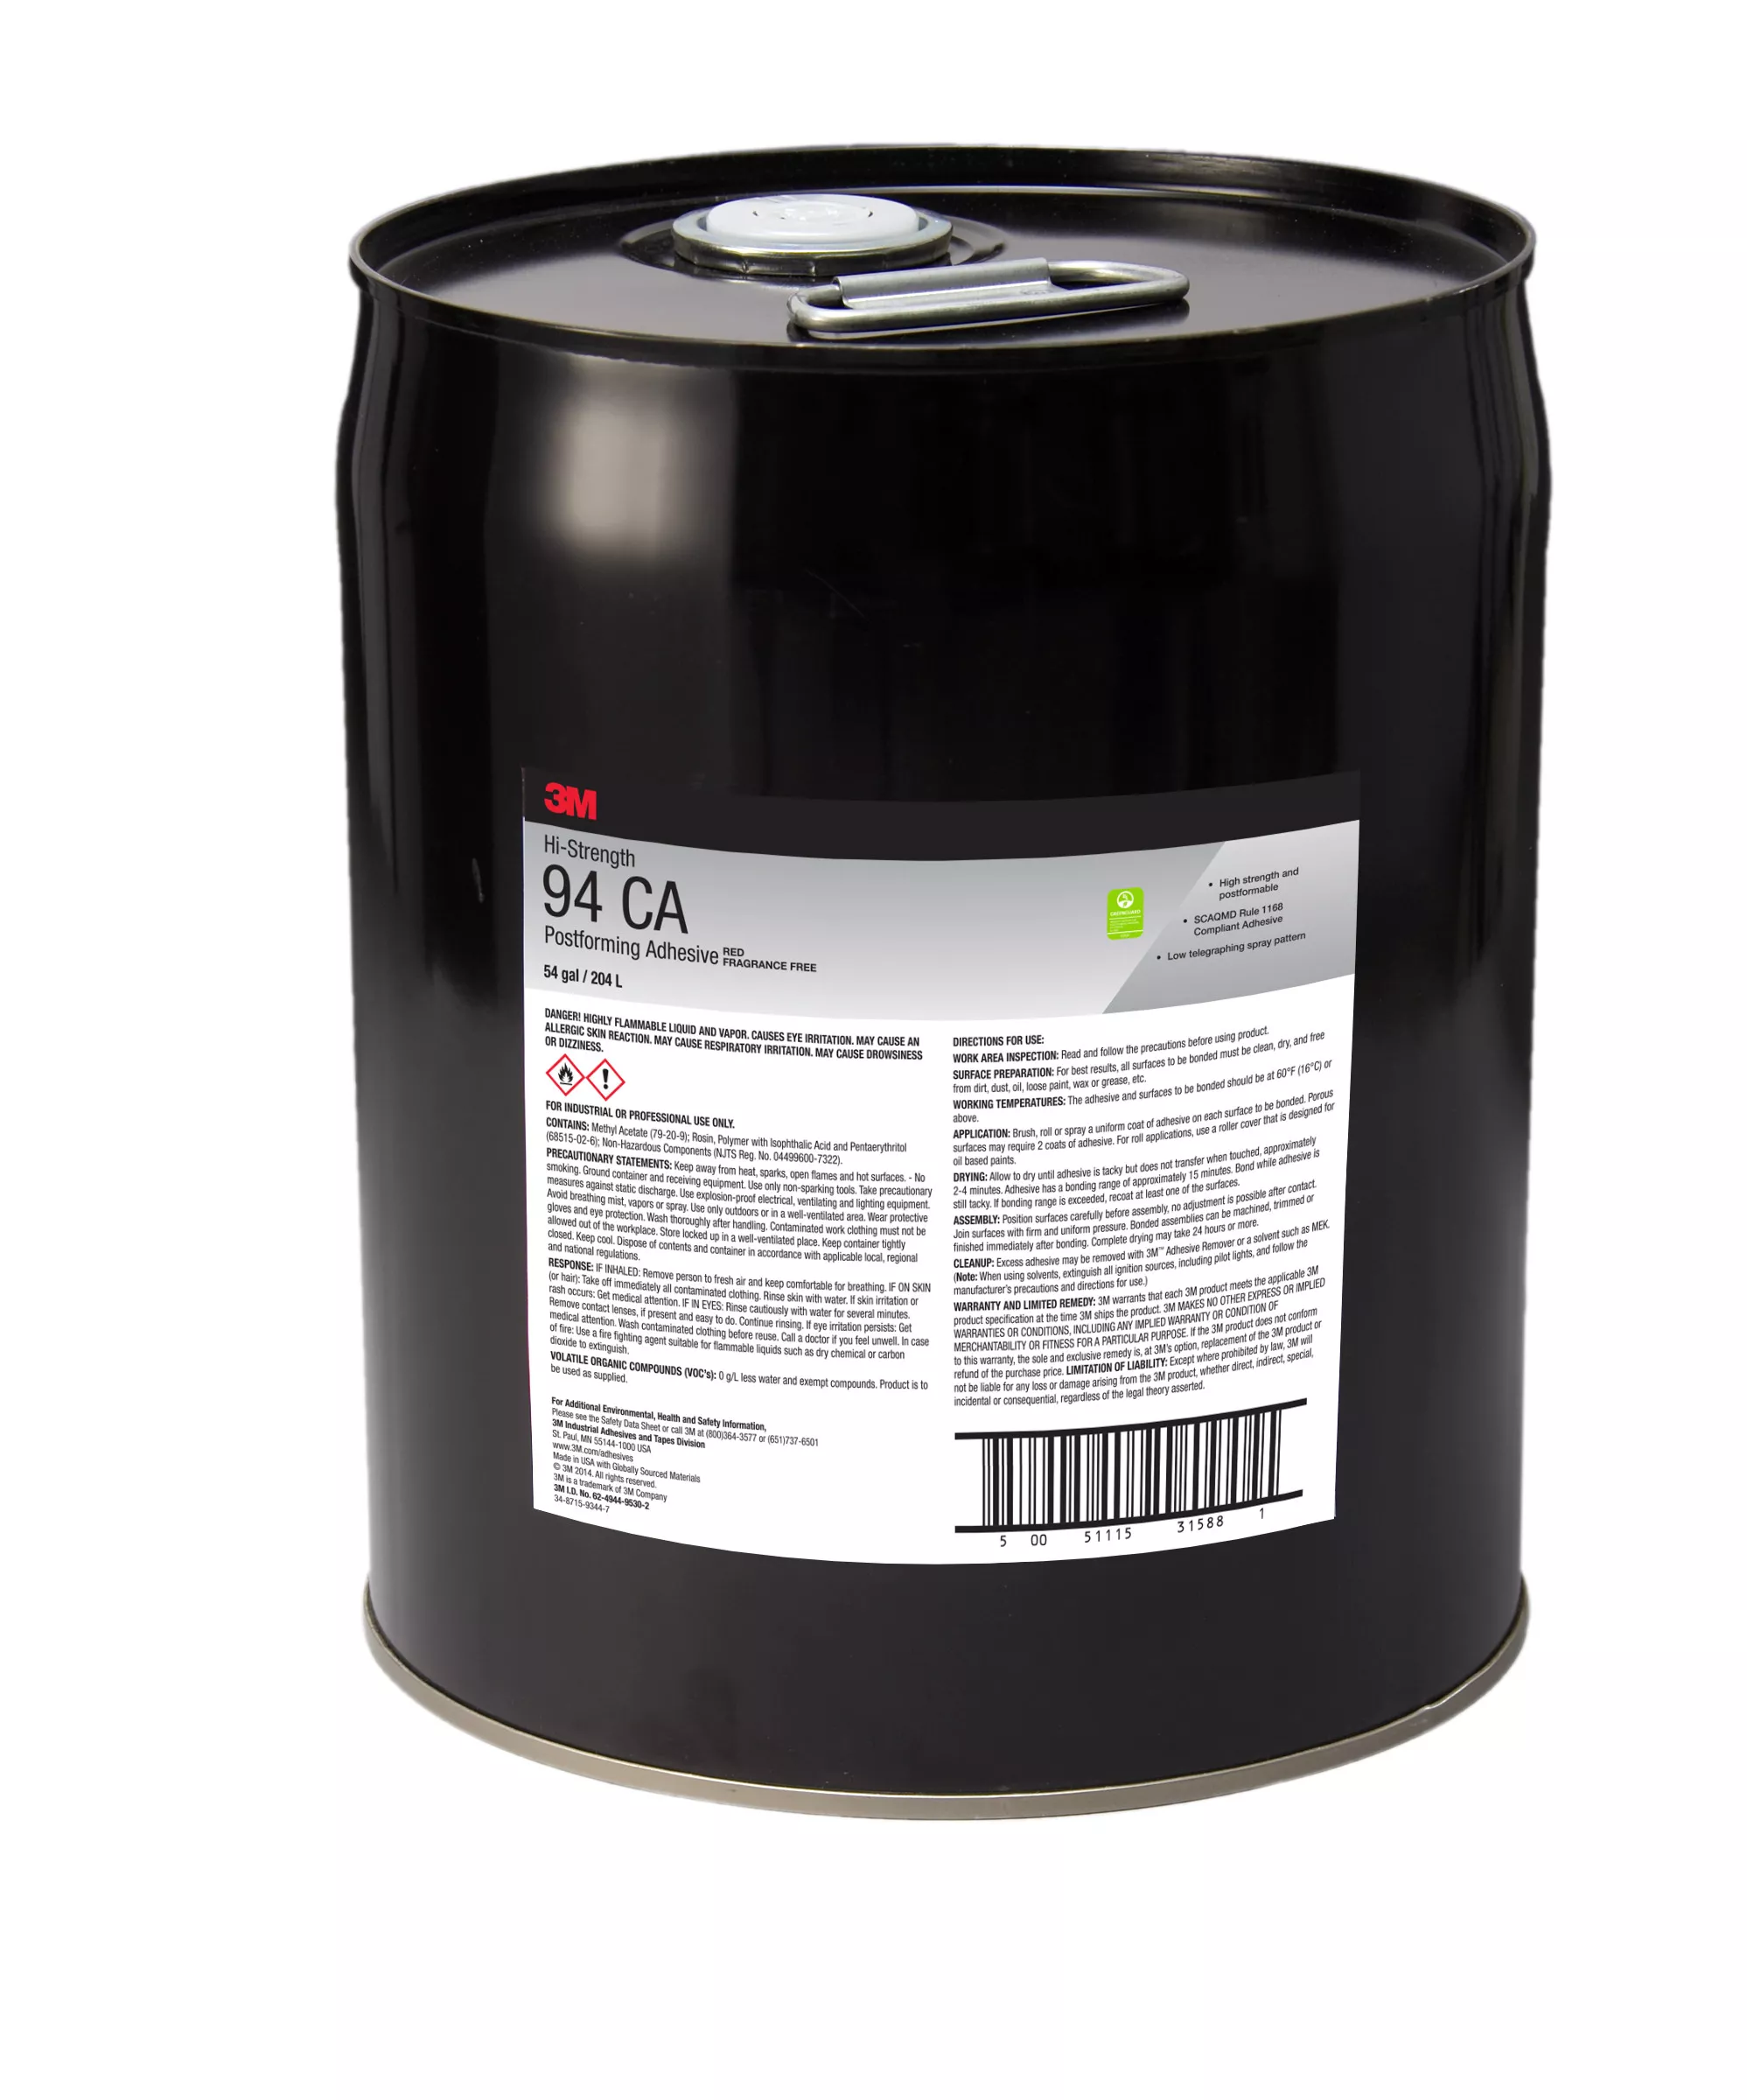 3M™ Hi-Strength Postforming 94 CA Adhesive, Red, 55 Gallon (54 Gallon
Net), Drum